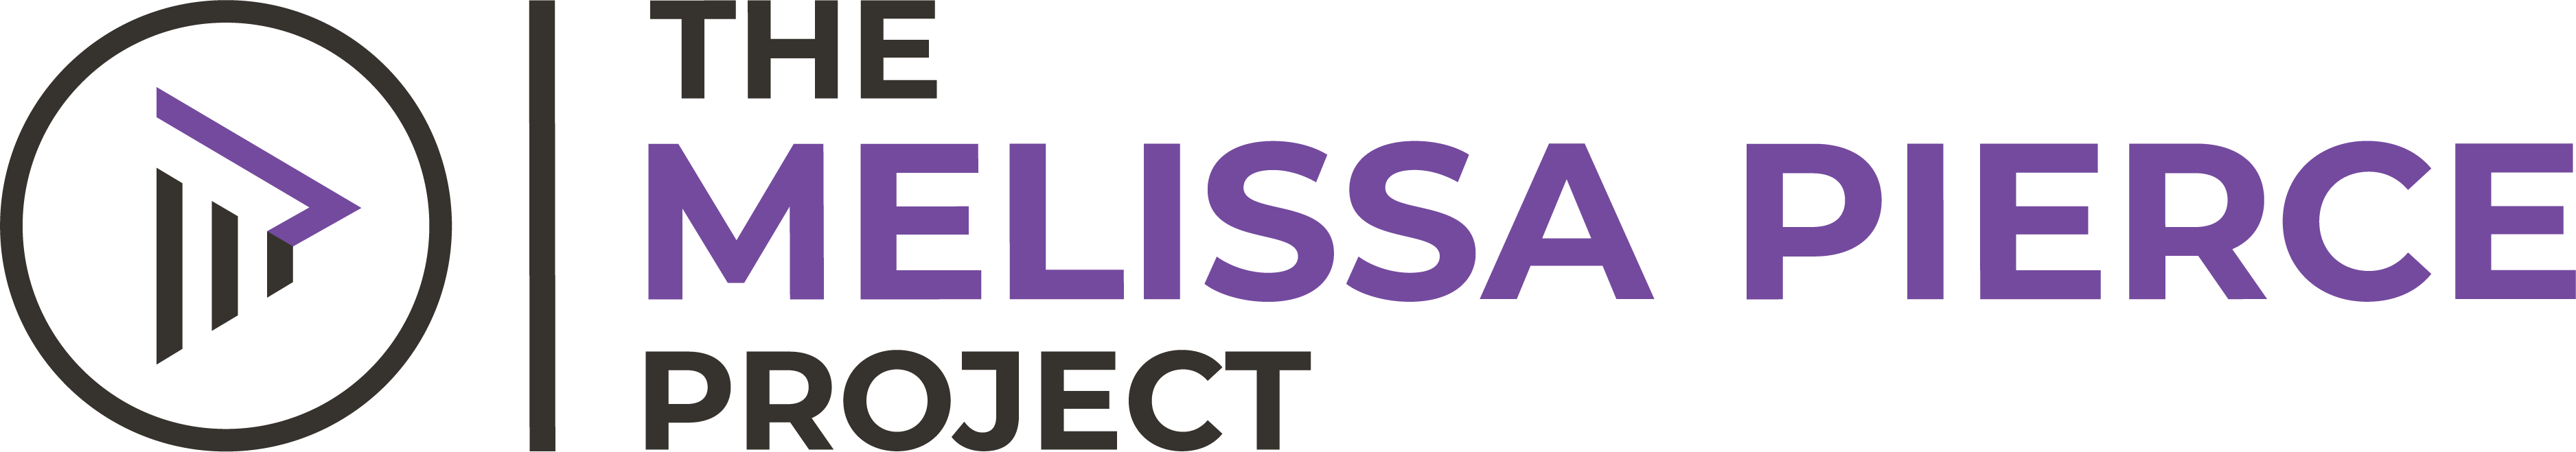 The Melissa Pierce Project